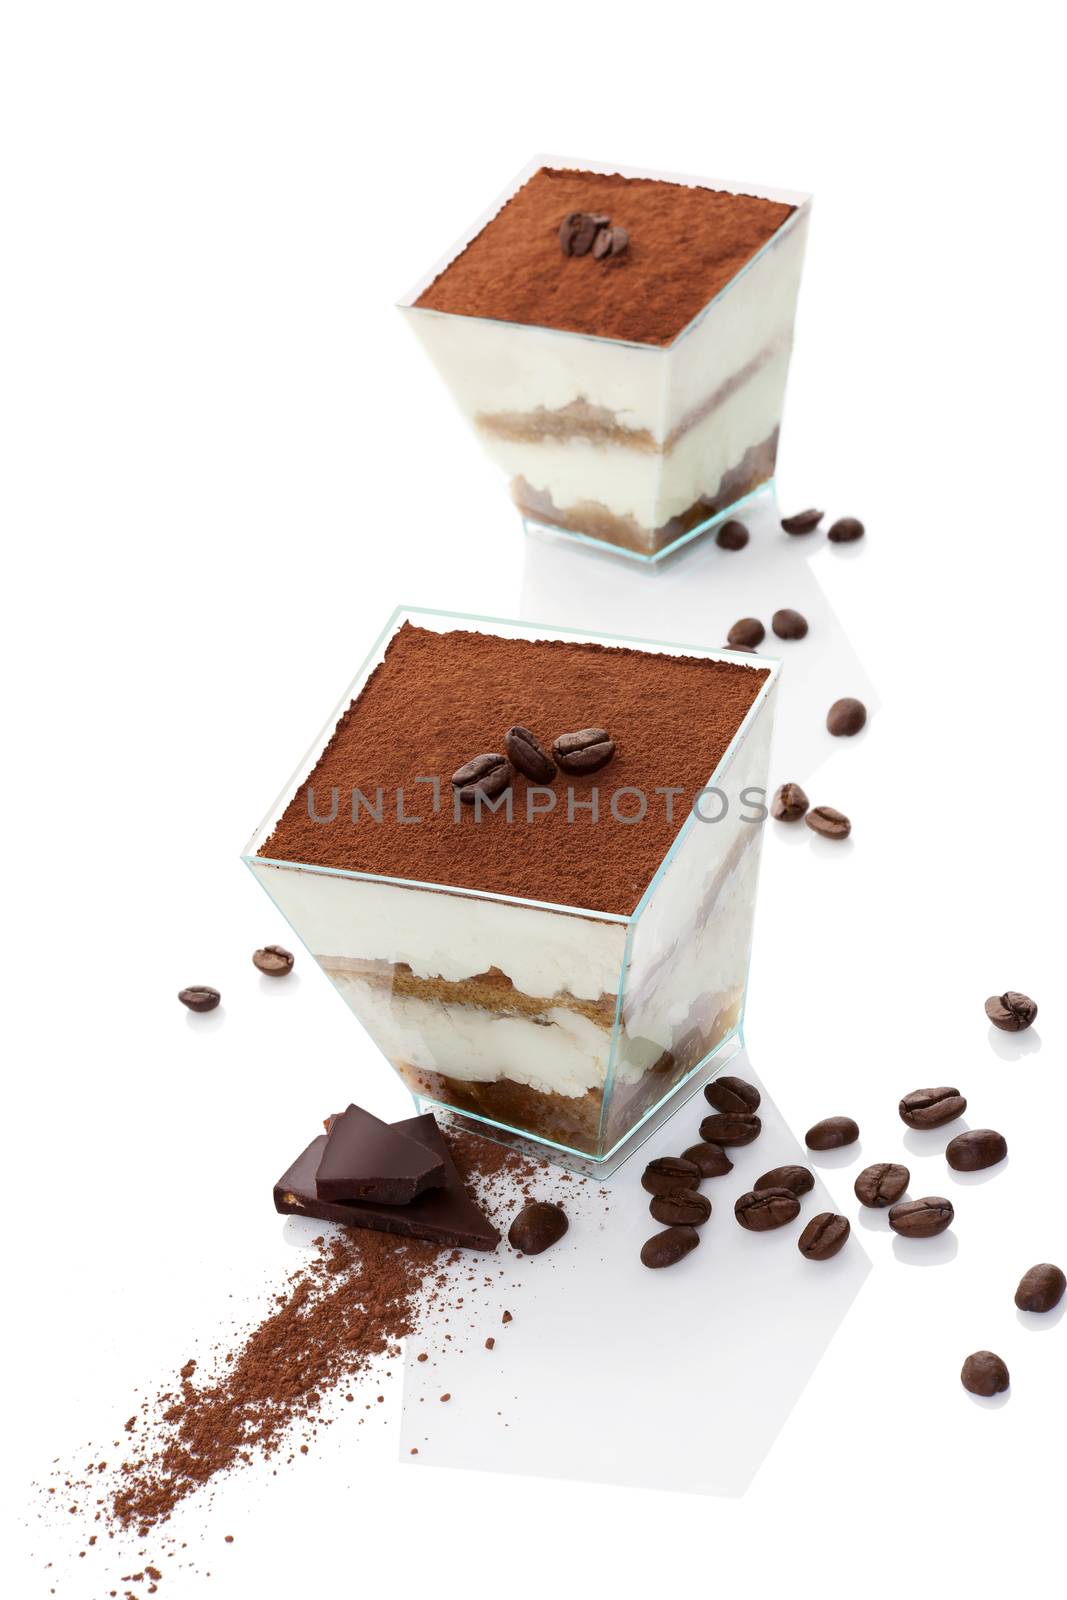 Tiramisu dessert on chocolate bar with coffee beans isolated on white background. Italian sweet dessert concept.